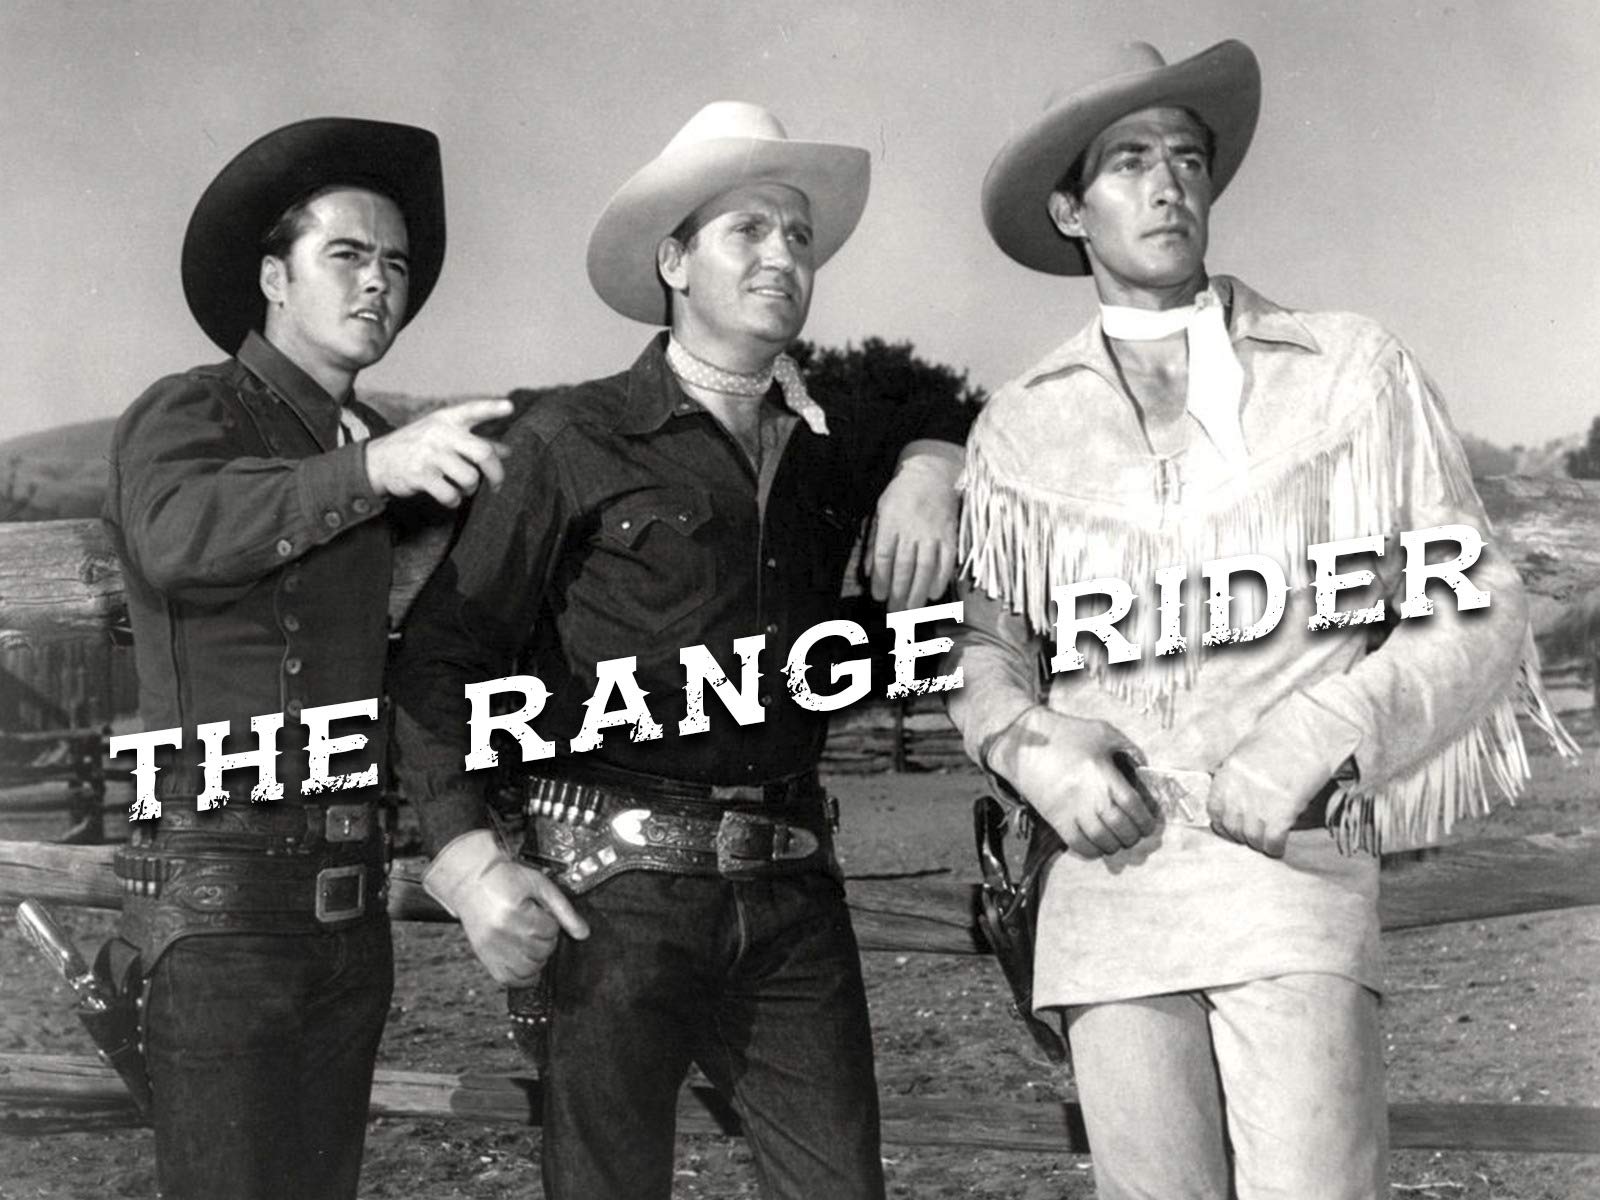 Watch The Range Rider - Season 3